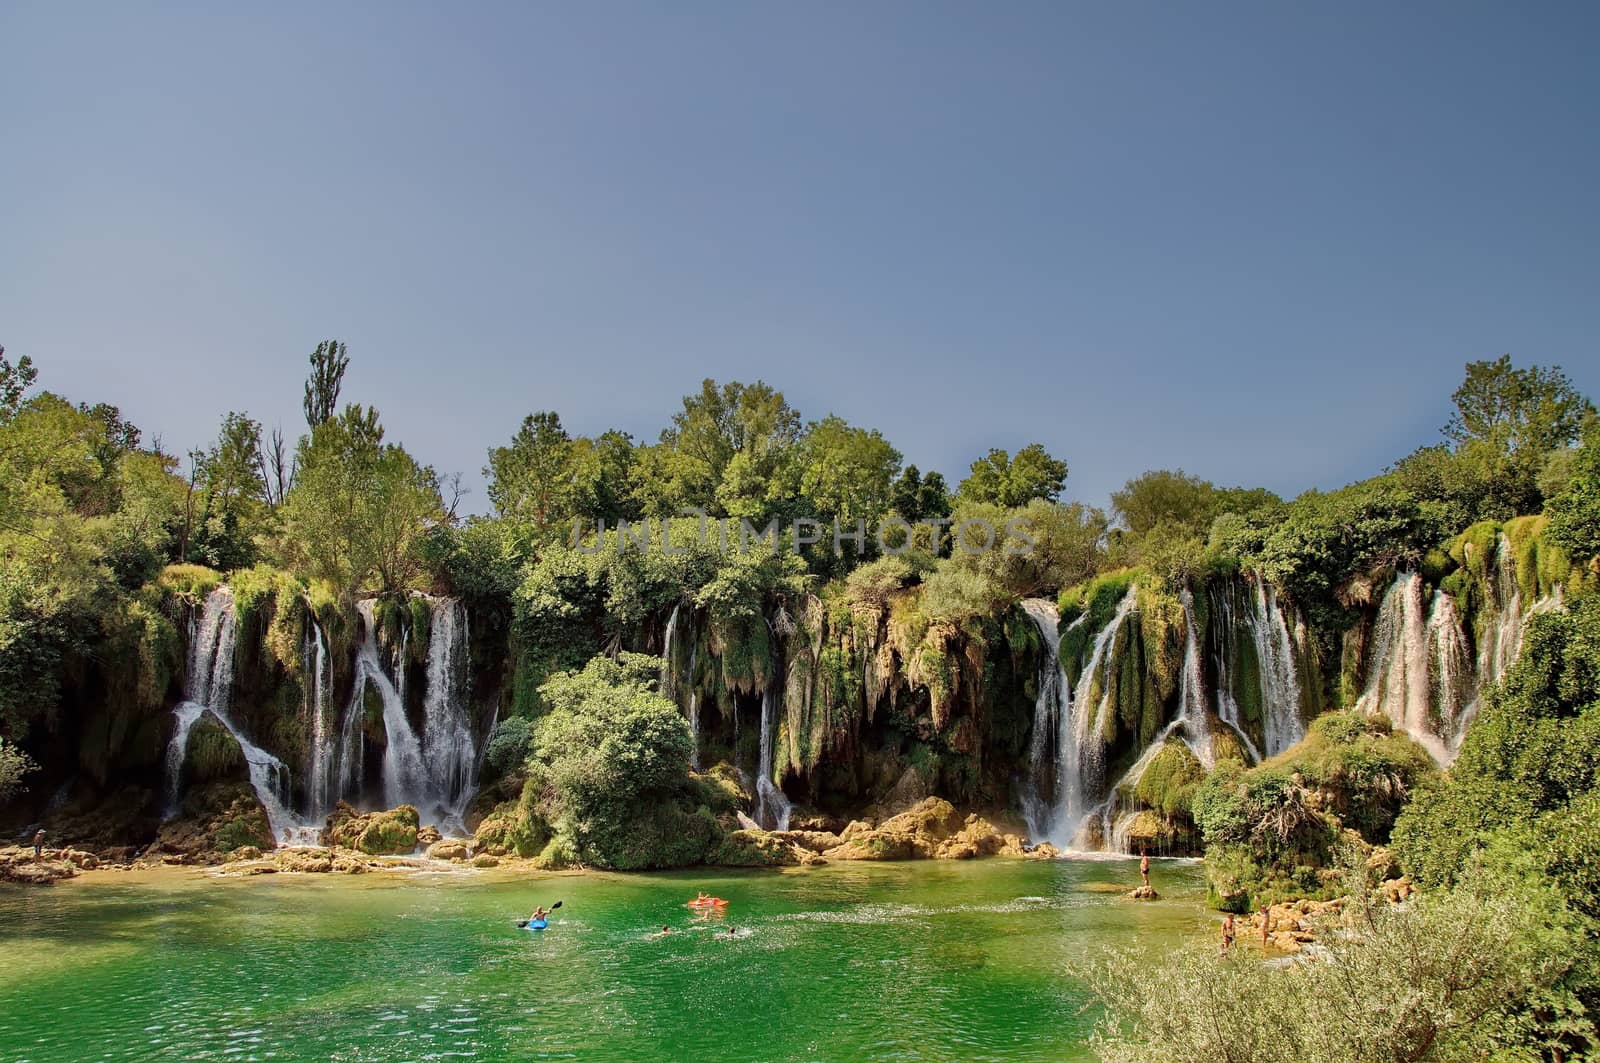 Kravice waterfalls in Bosnia Herzegovina by anderm